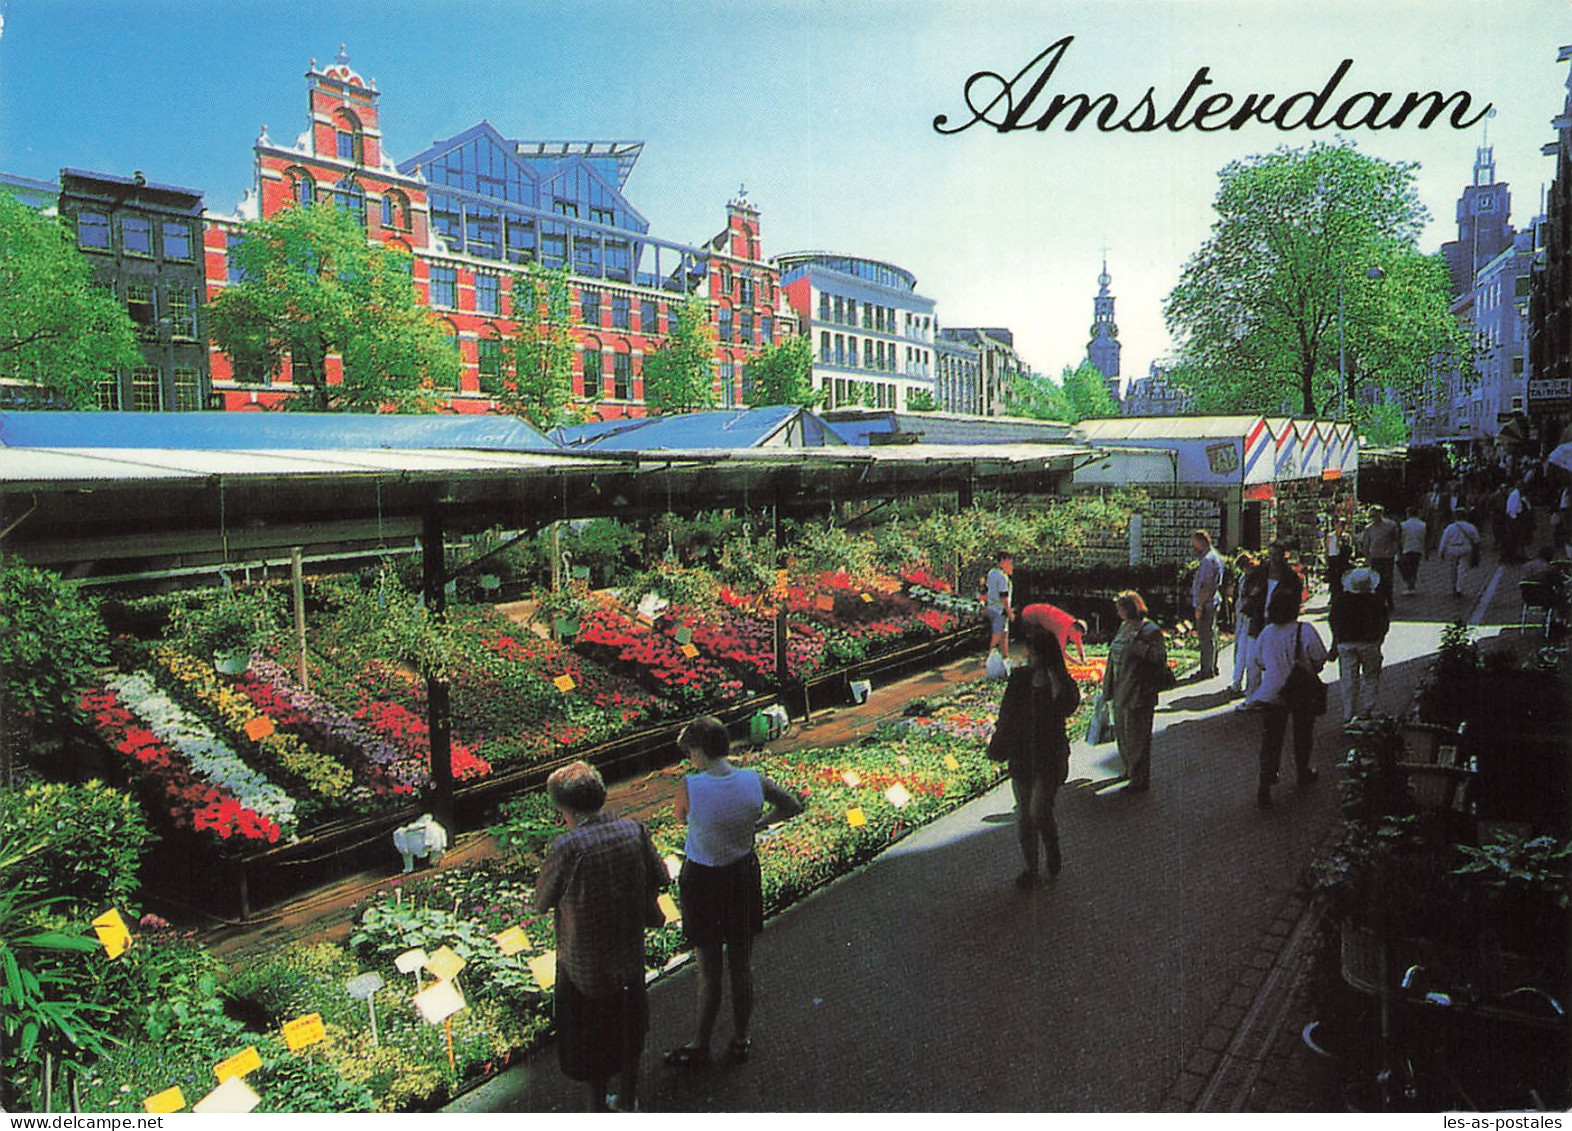 NL AMSTERDAM - Amsterdam